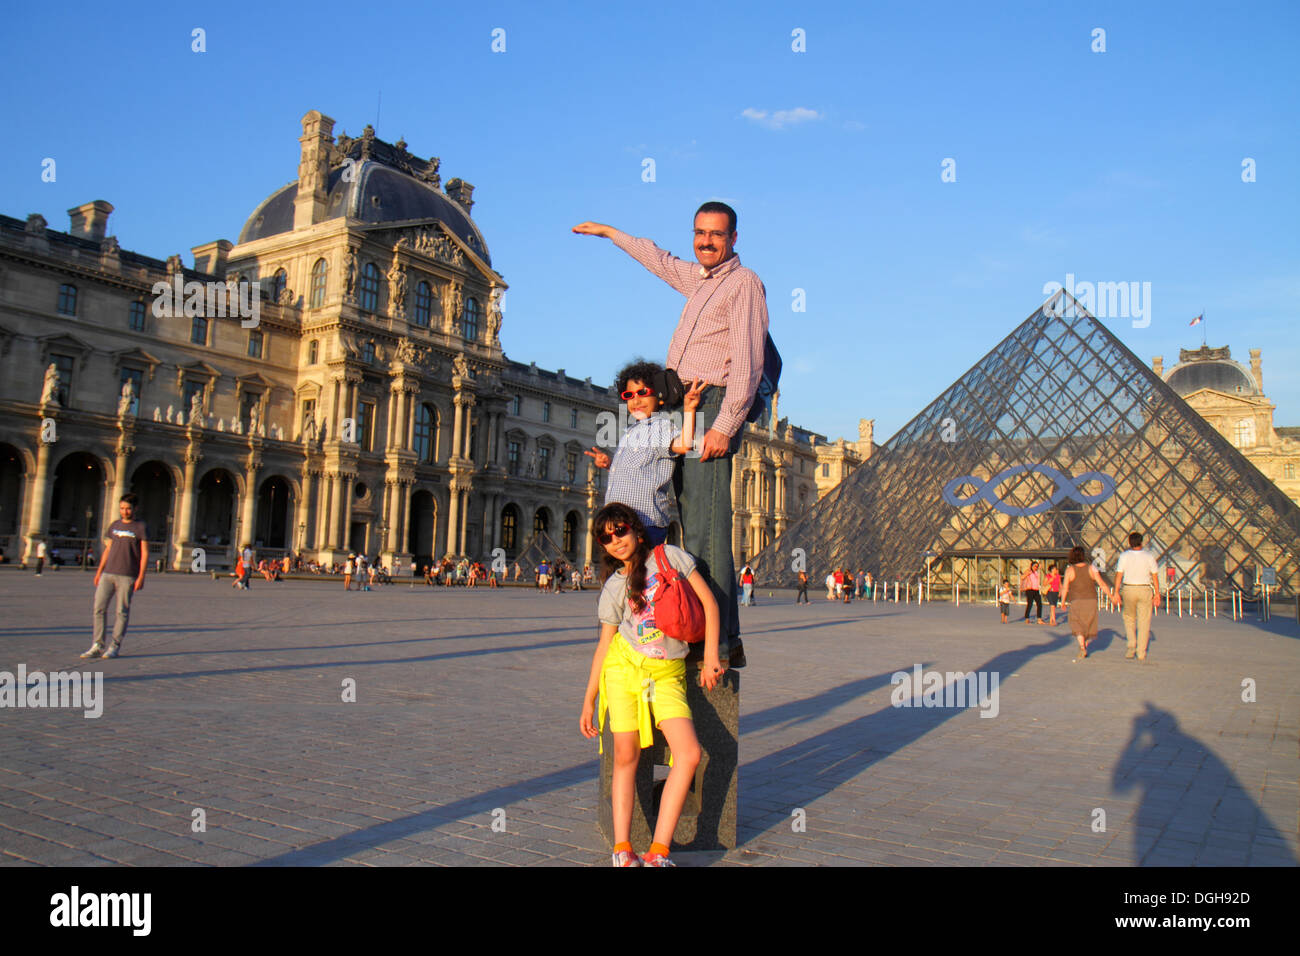 Paris France,1st arrondissement,Napoleon Courtyard,Louvre Art Museum,Musee du Louvre Palace,Pyramid,Muslim ethnic man men male,father,boy boys male ki Stock Photo